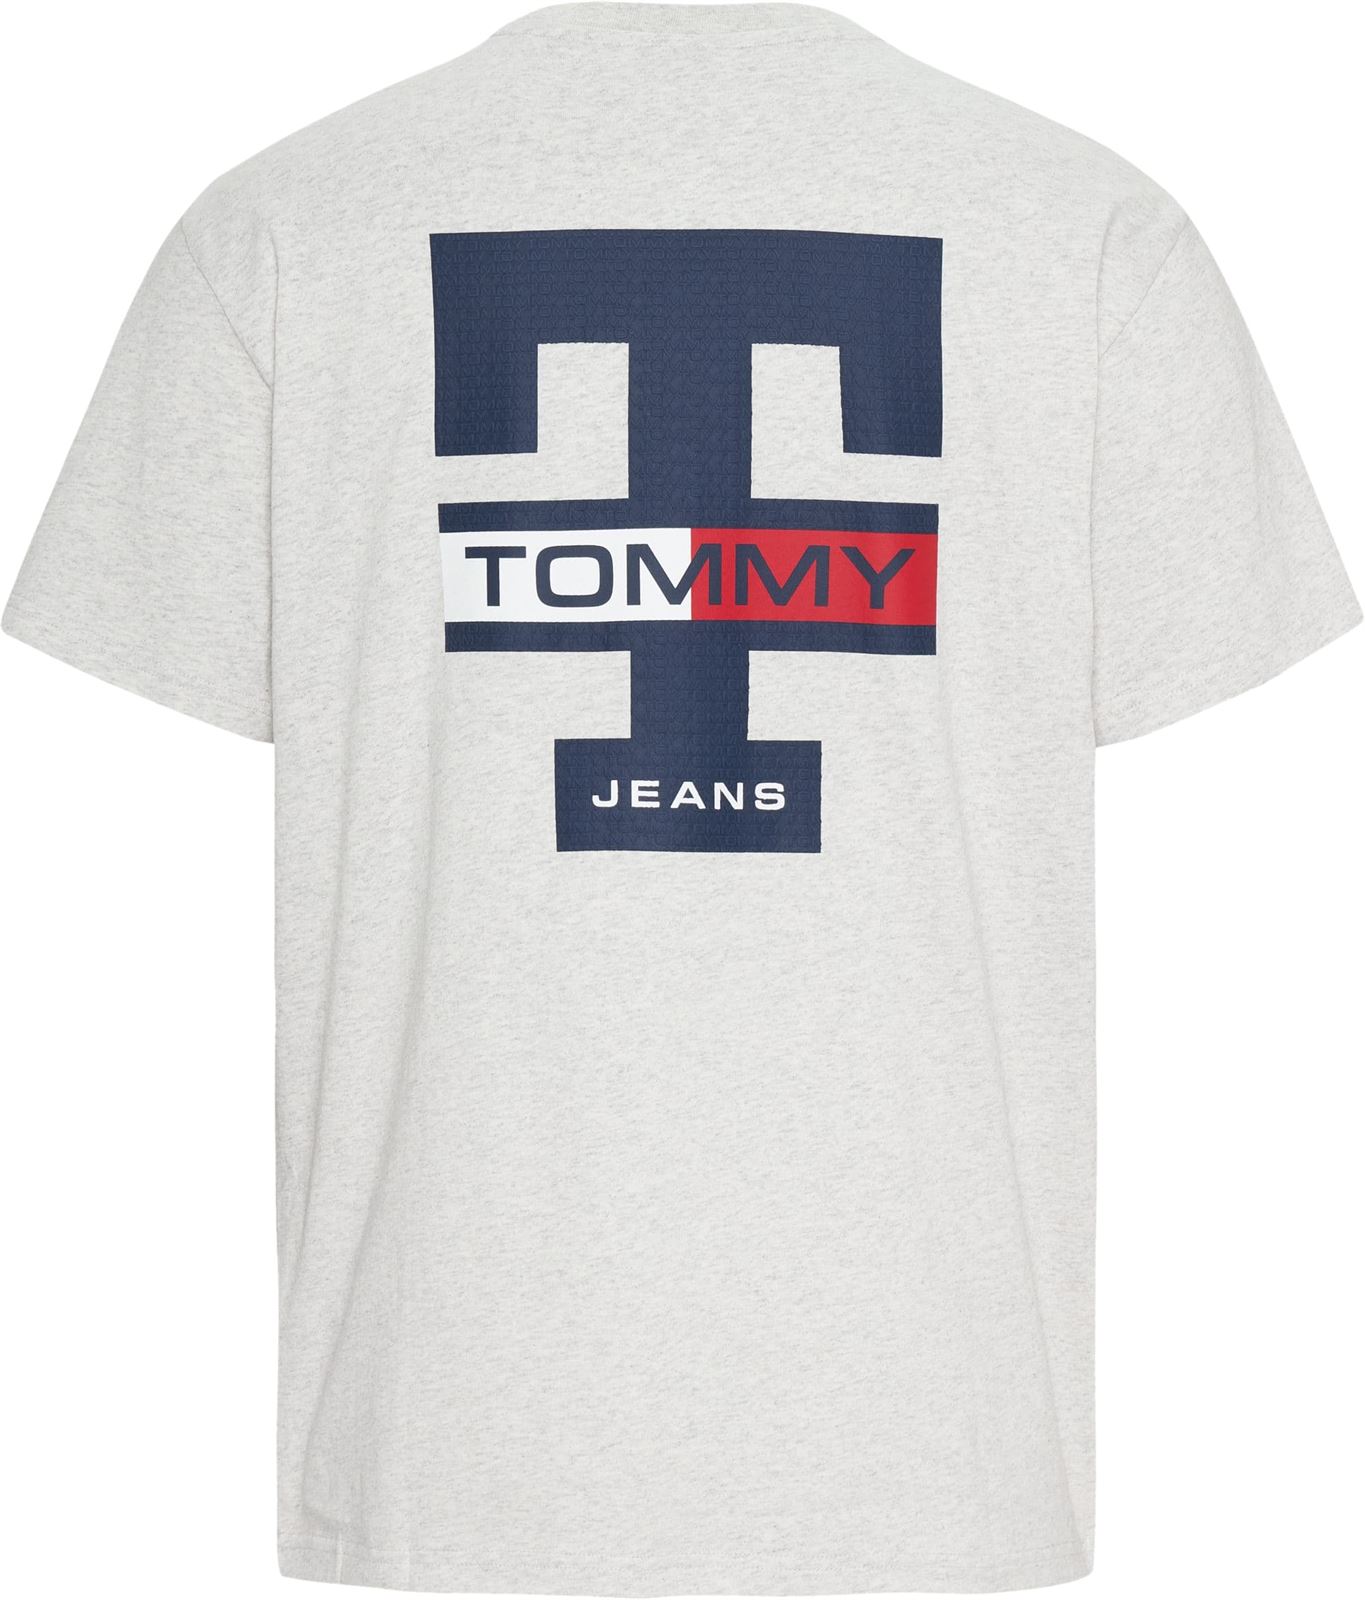 Camiseta TOMMY JEANS DM0DM16845 PJ4 silver grey - Imagen 2